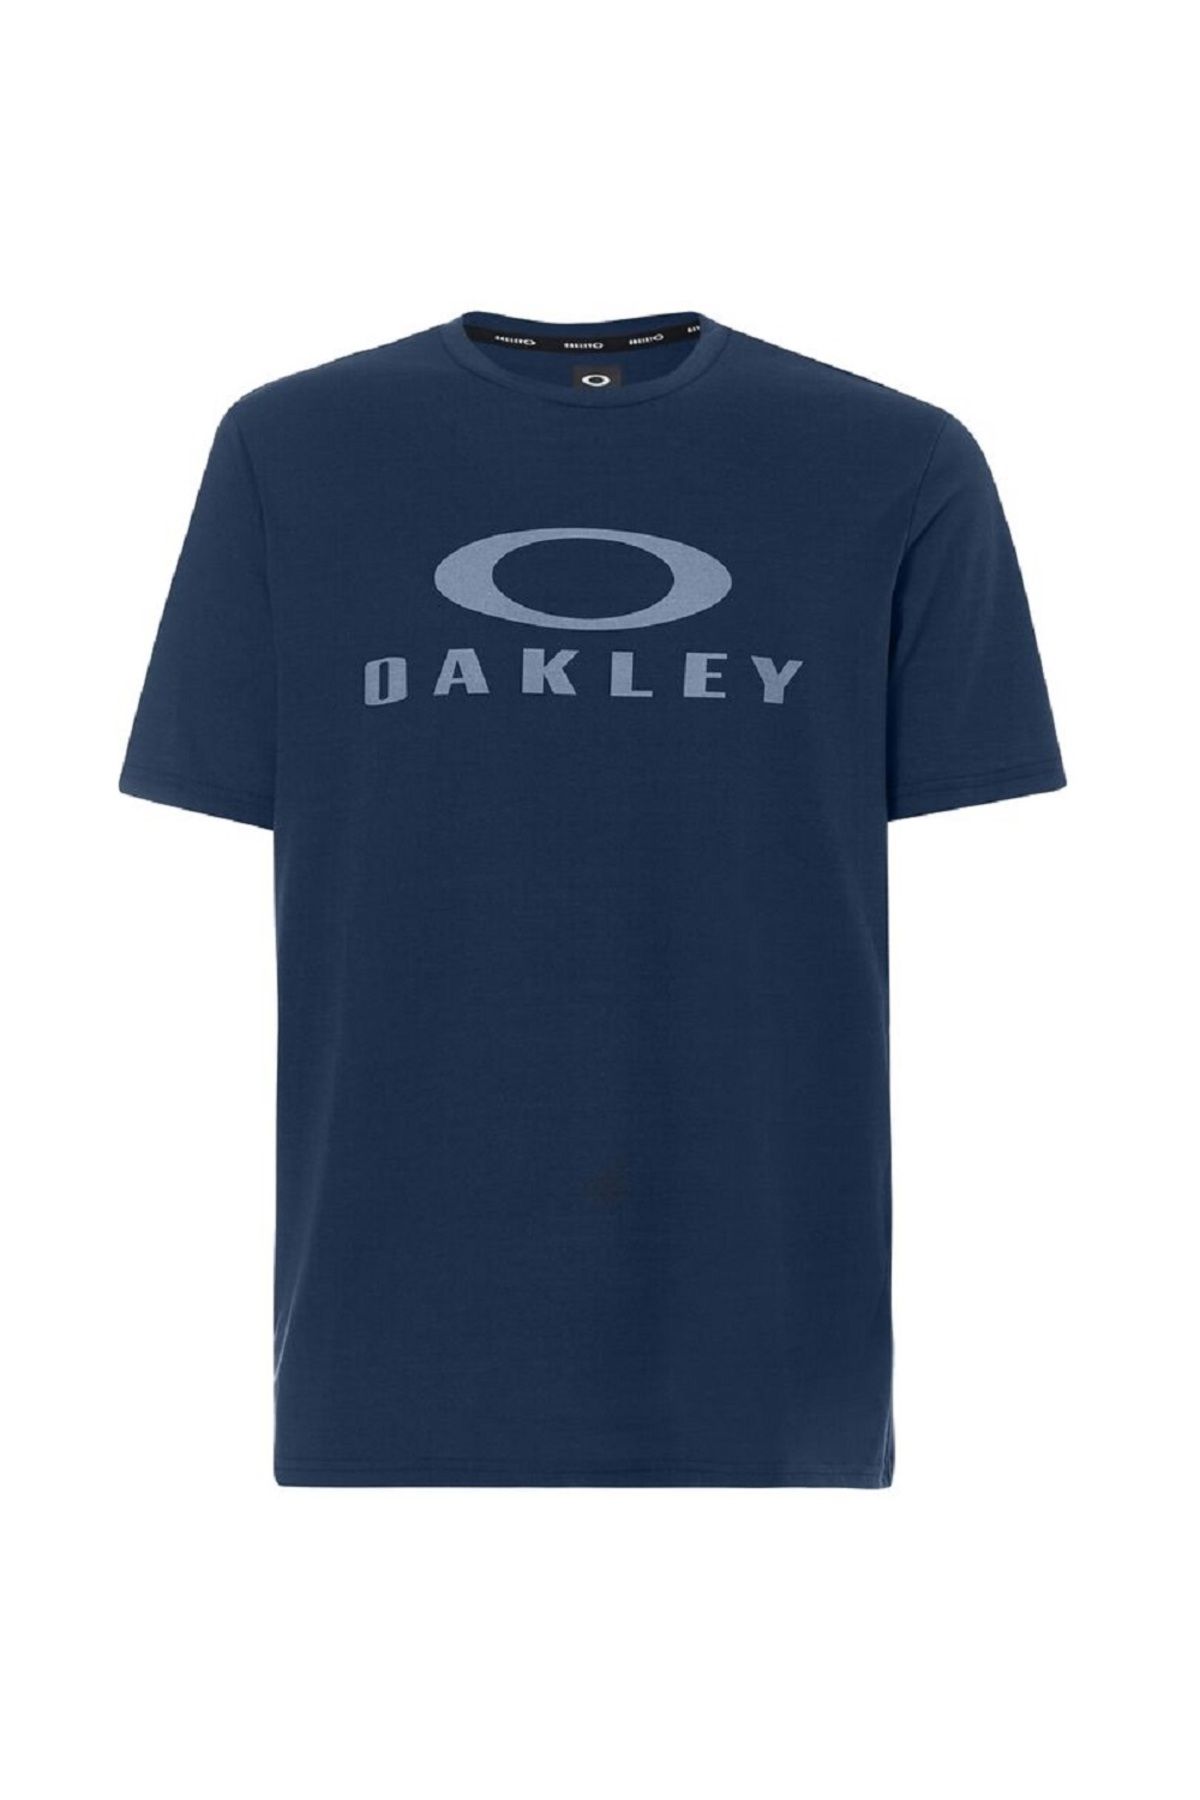 Oakley O Bark Unisex Kısa Kollu T-shirt